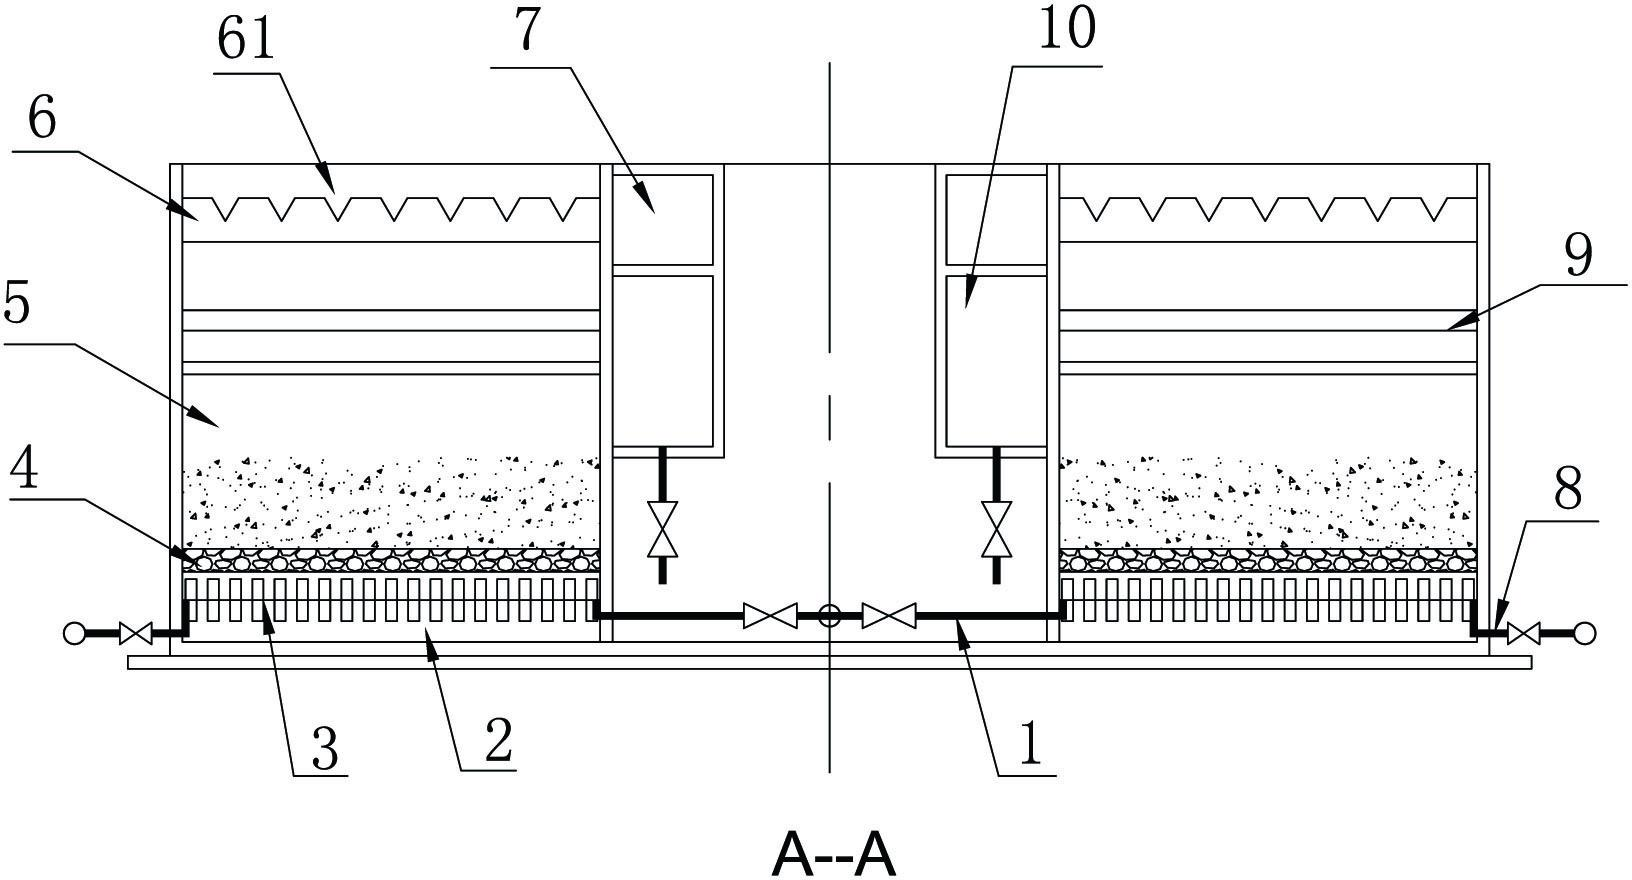 Homogeneous particle filter material reverse granularity rapid filter